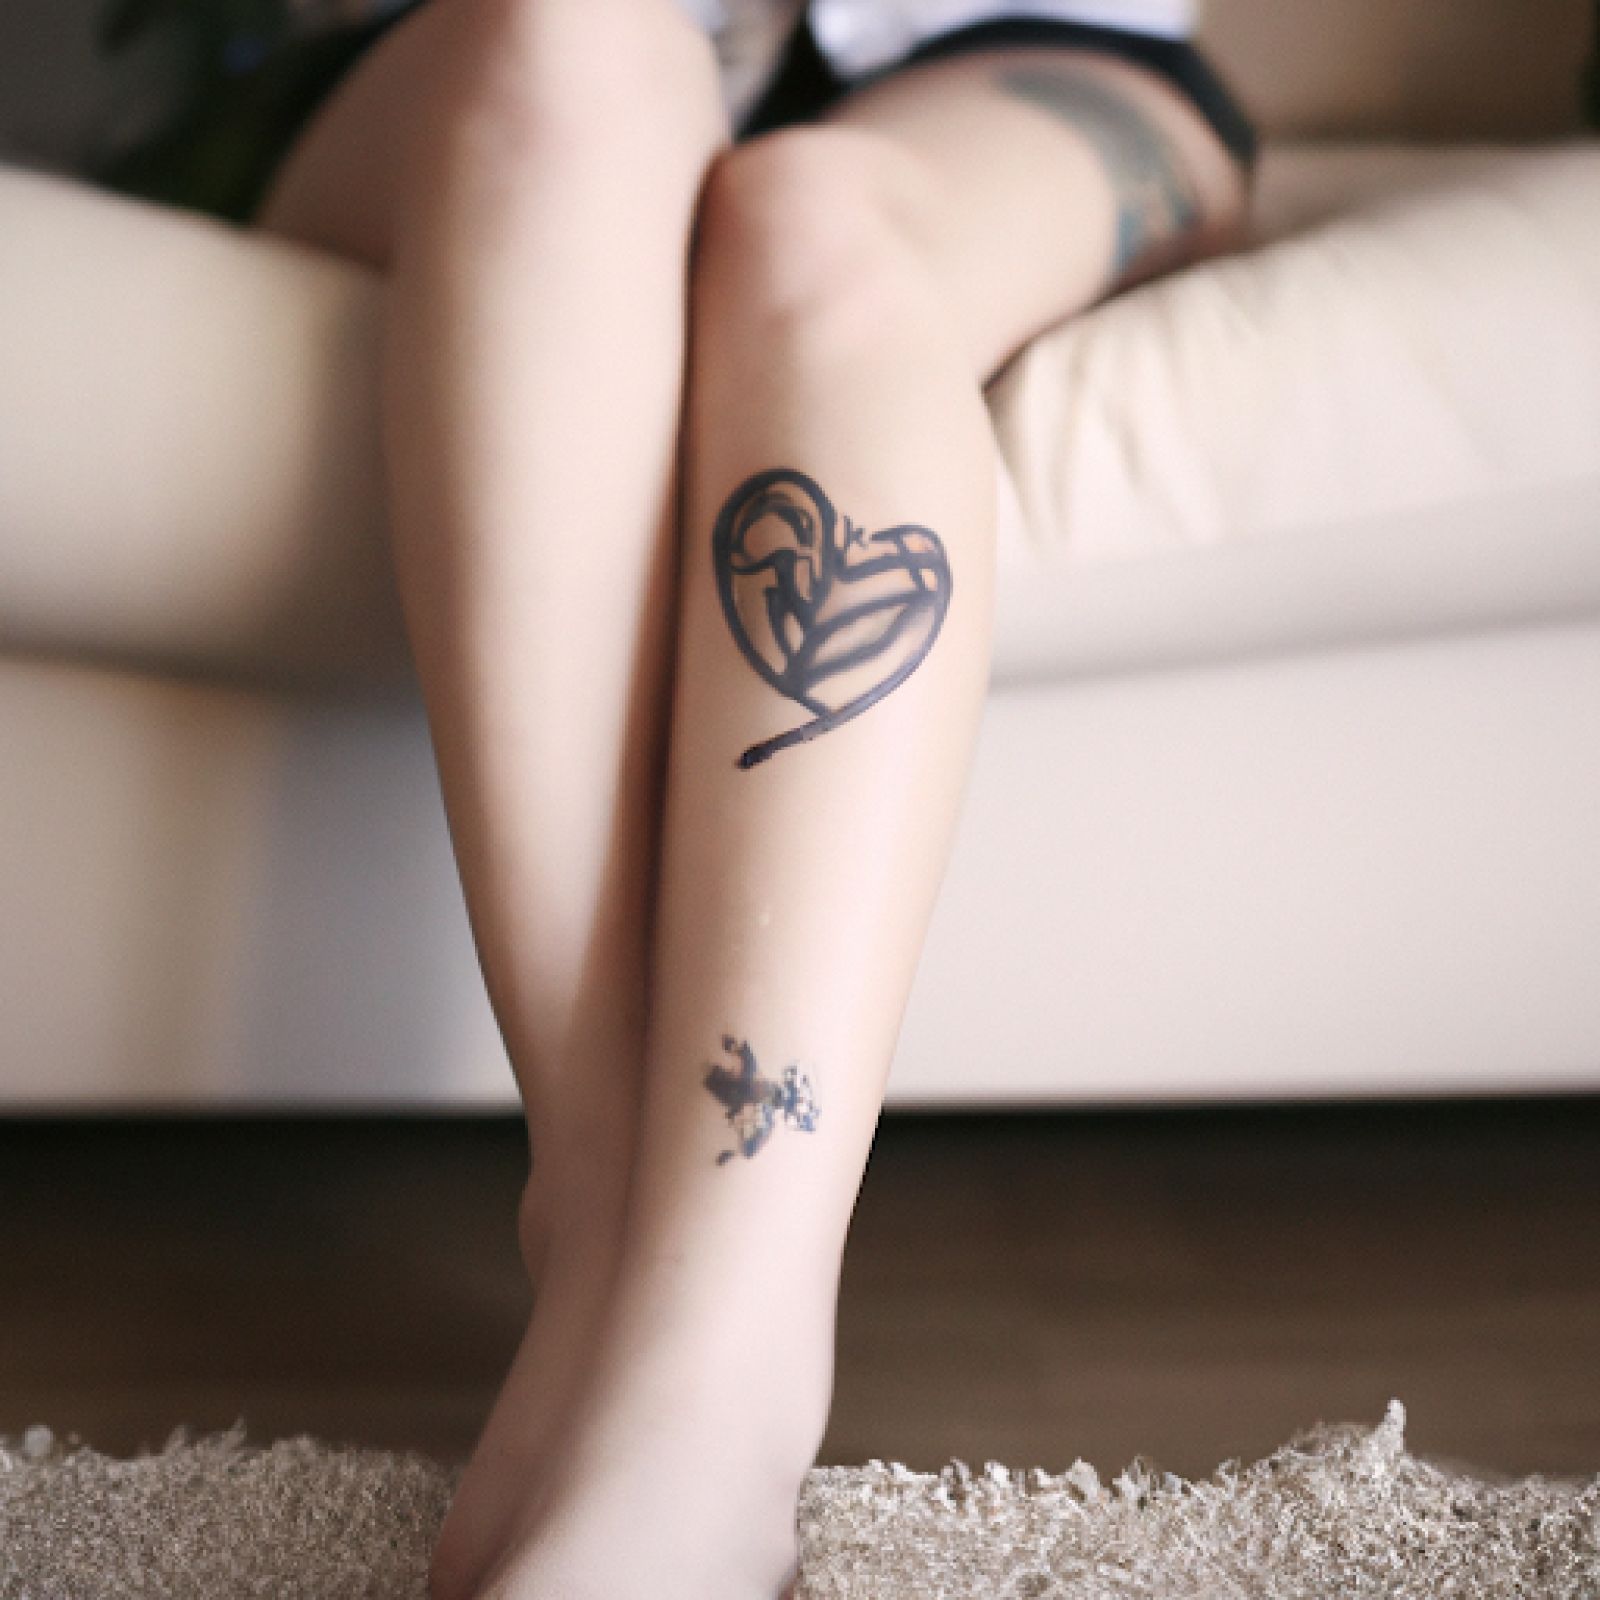 Broken heart tattoo on leg for women